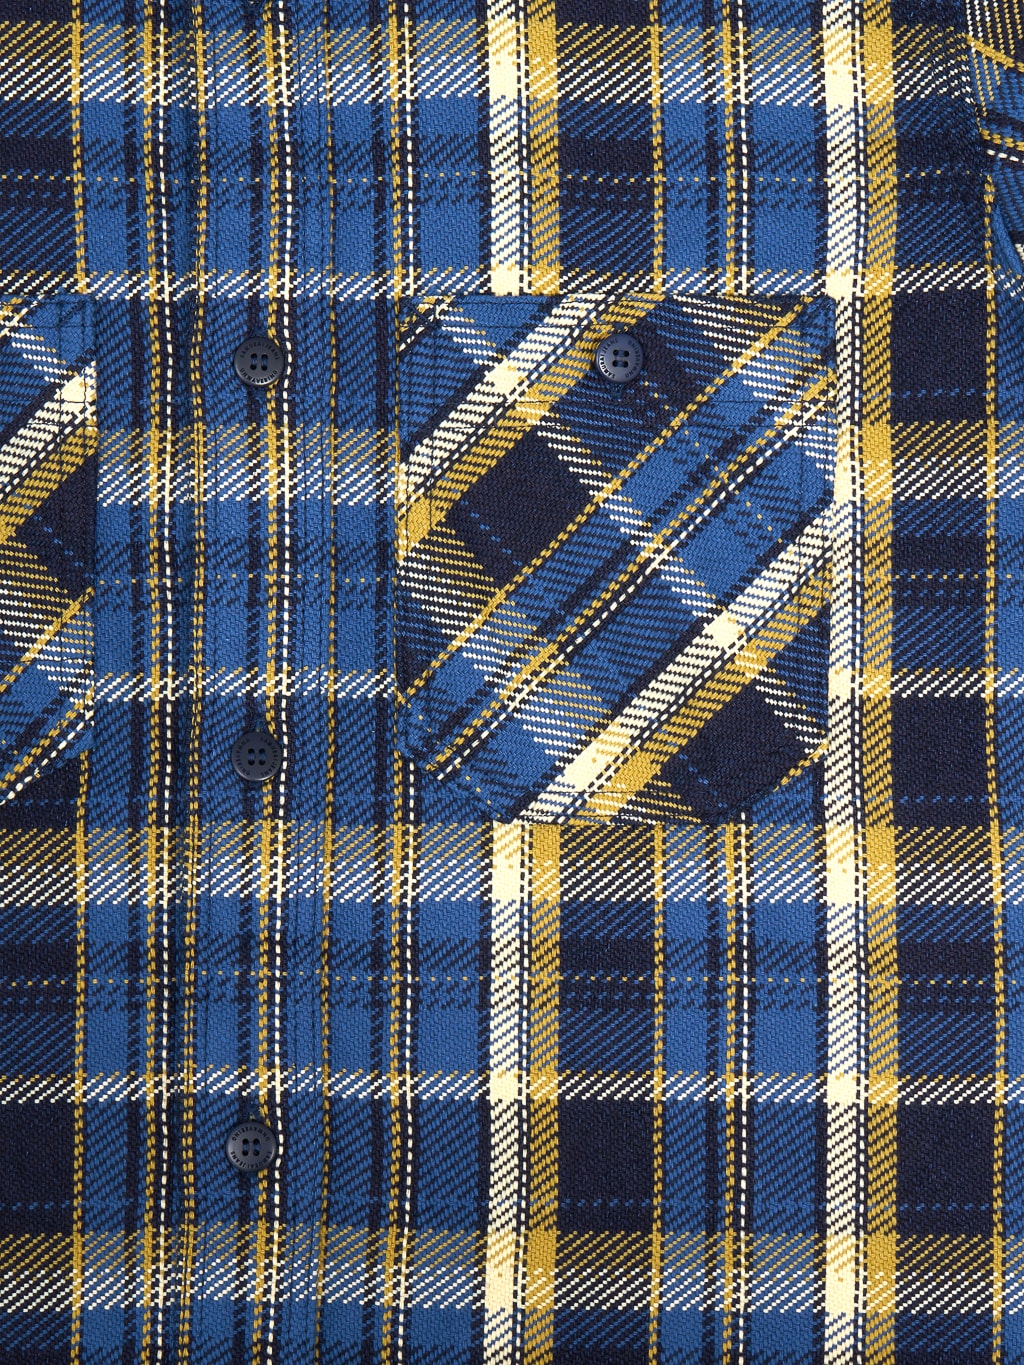 Samurai Jeans SIN23-01W Rope Dyed Indigo Heavy Flannel Shirt Blue